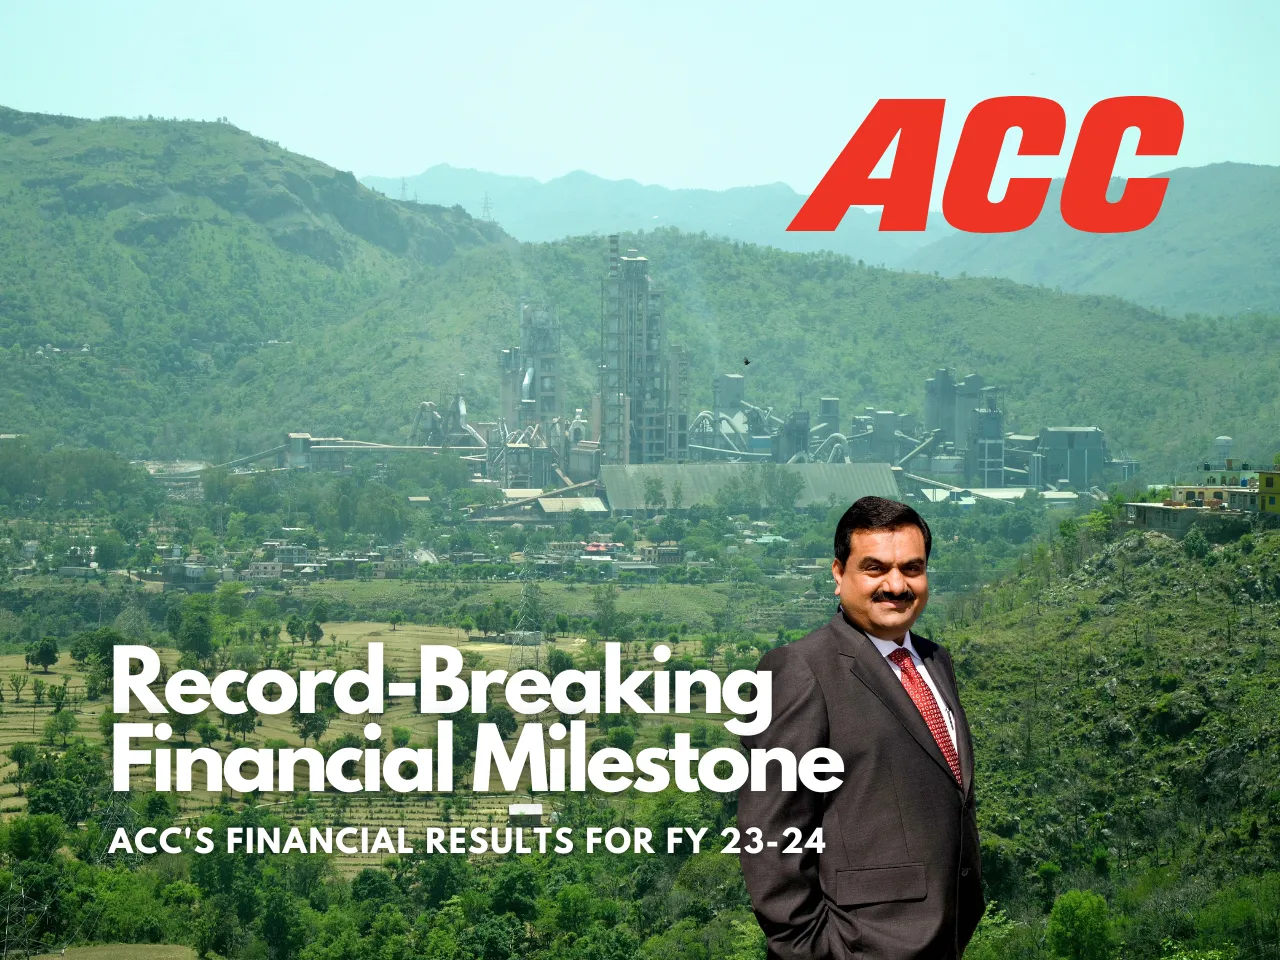 ACC Financial Milestone